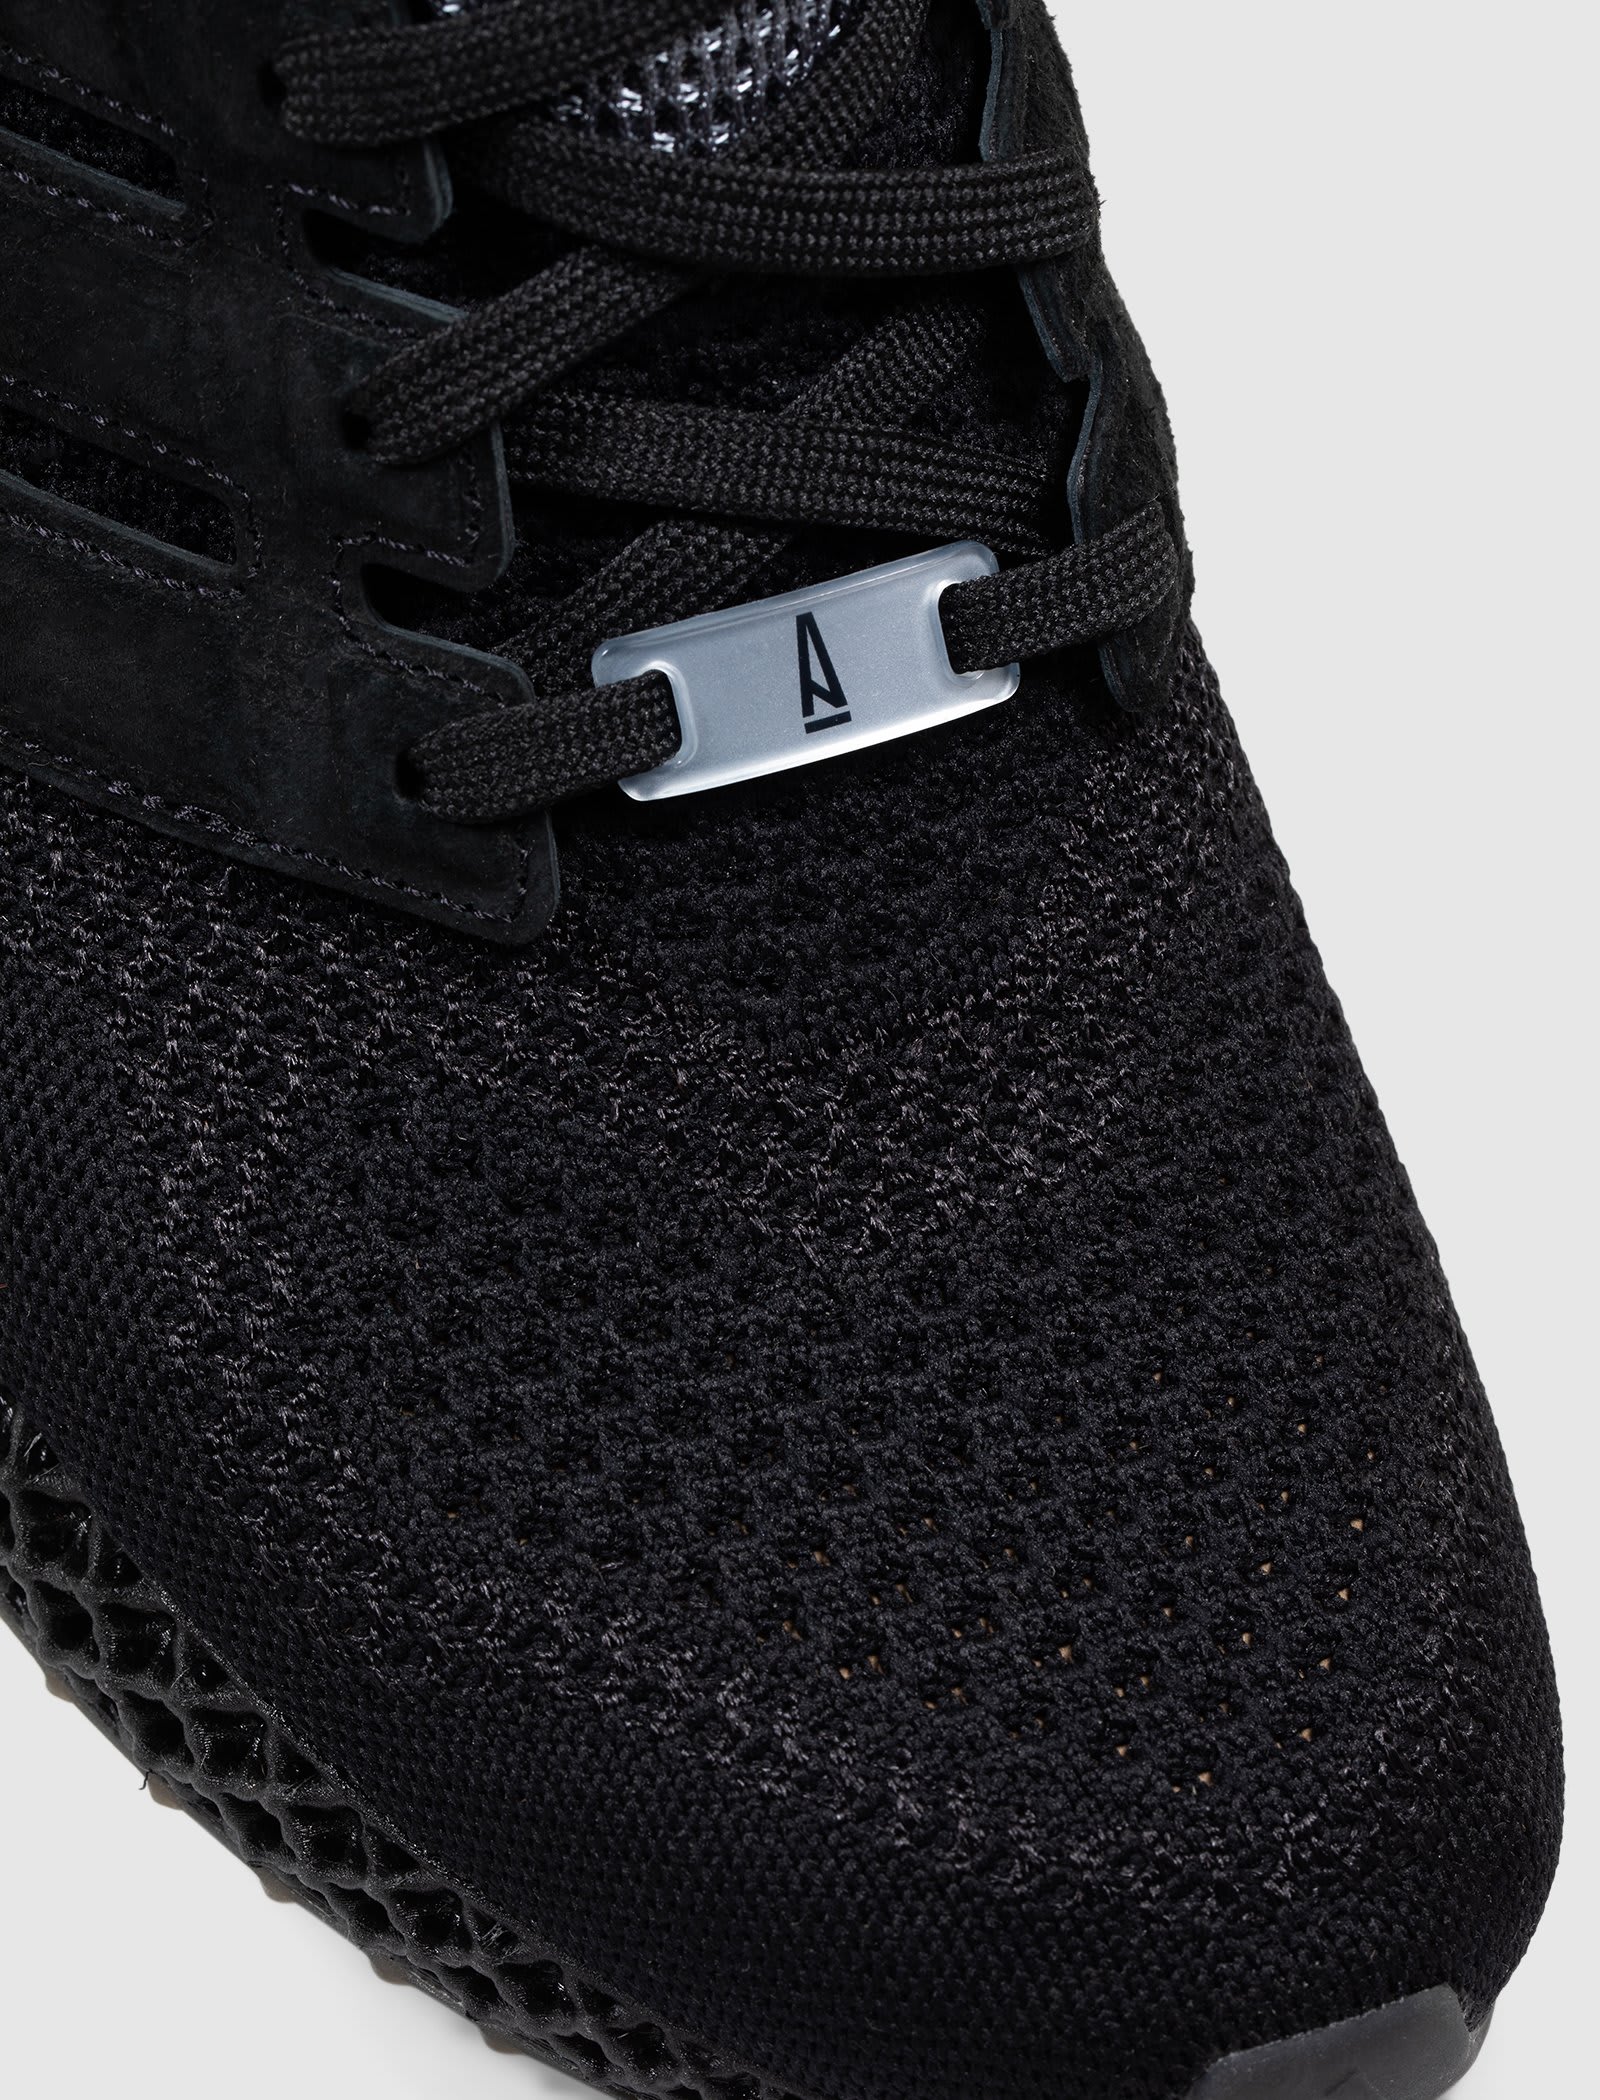 A Ma Maniere Adidas Ultra 4D G55274 Release Date Toe Detail